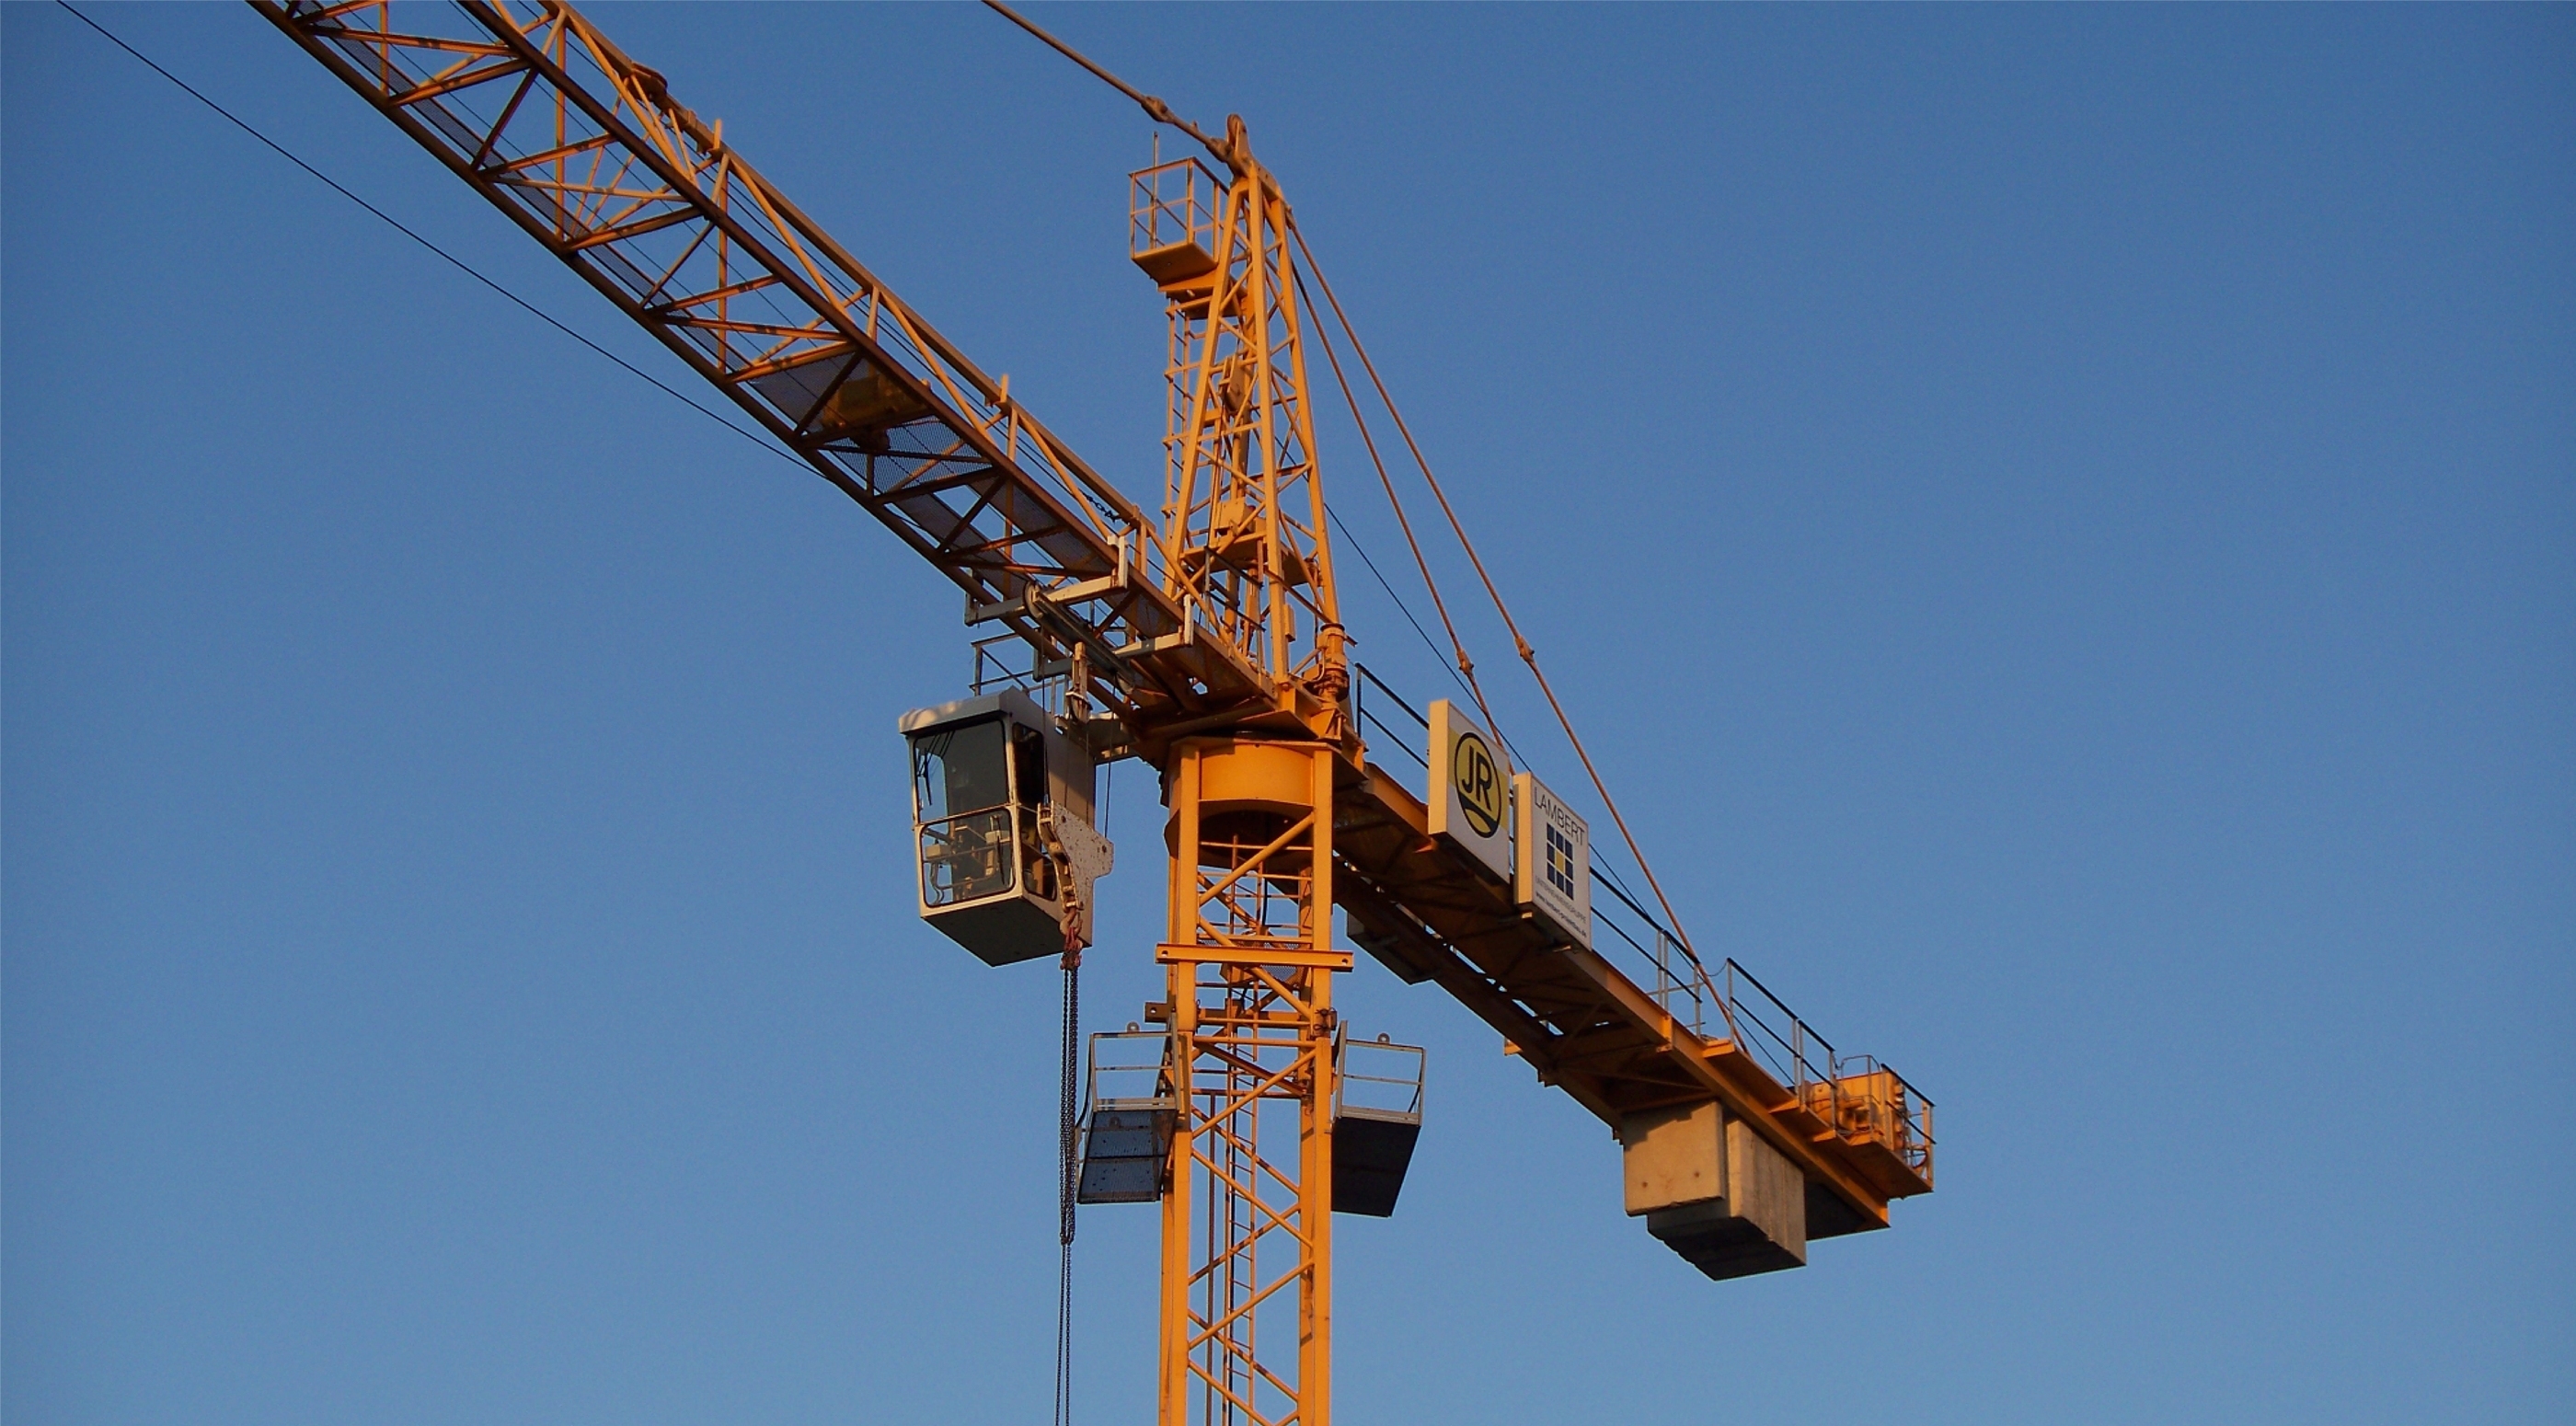 File:Tower crane, close-up.jpg - Wikimedia Commons